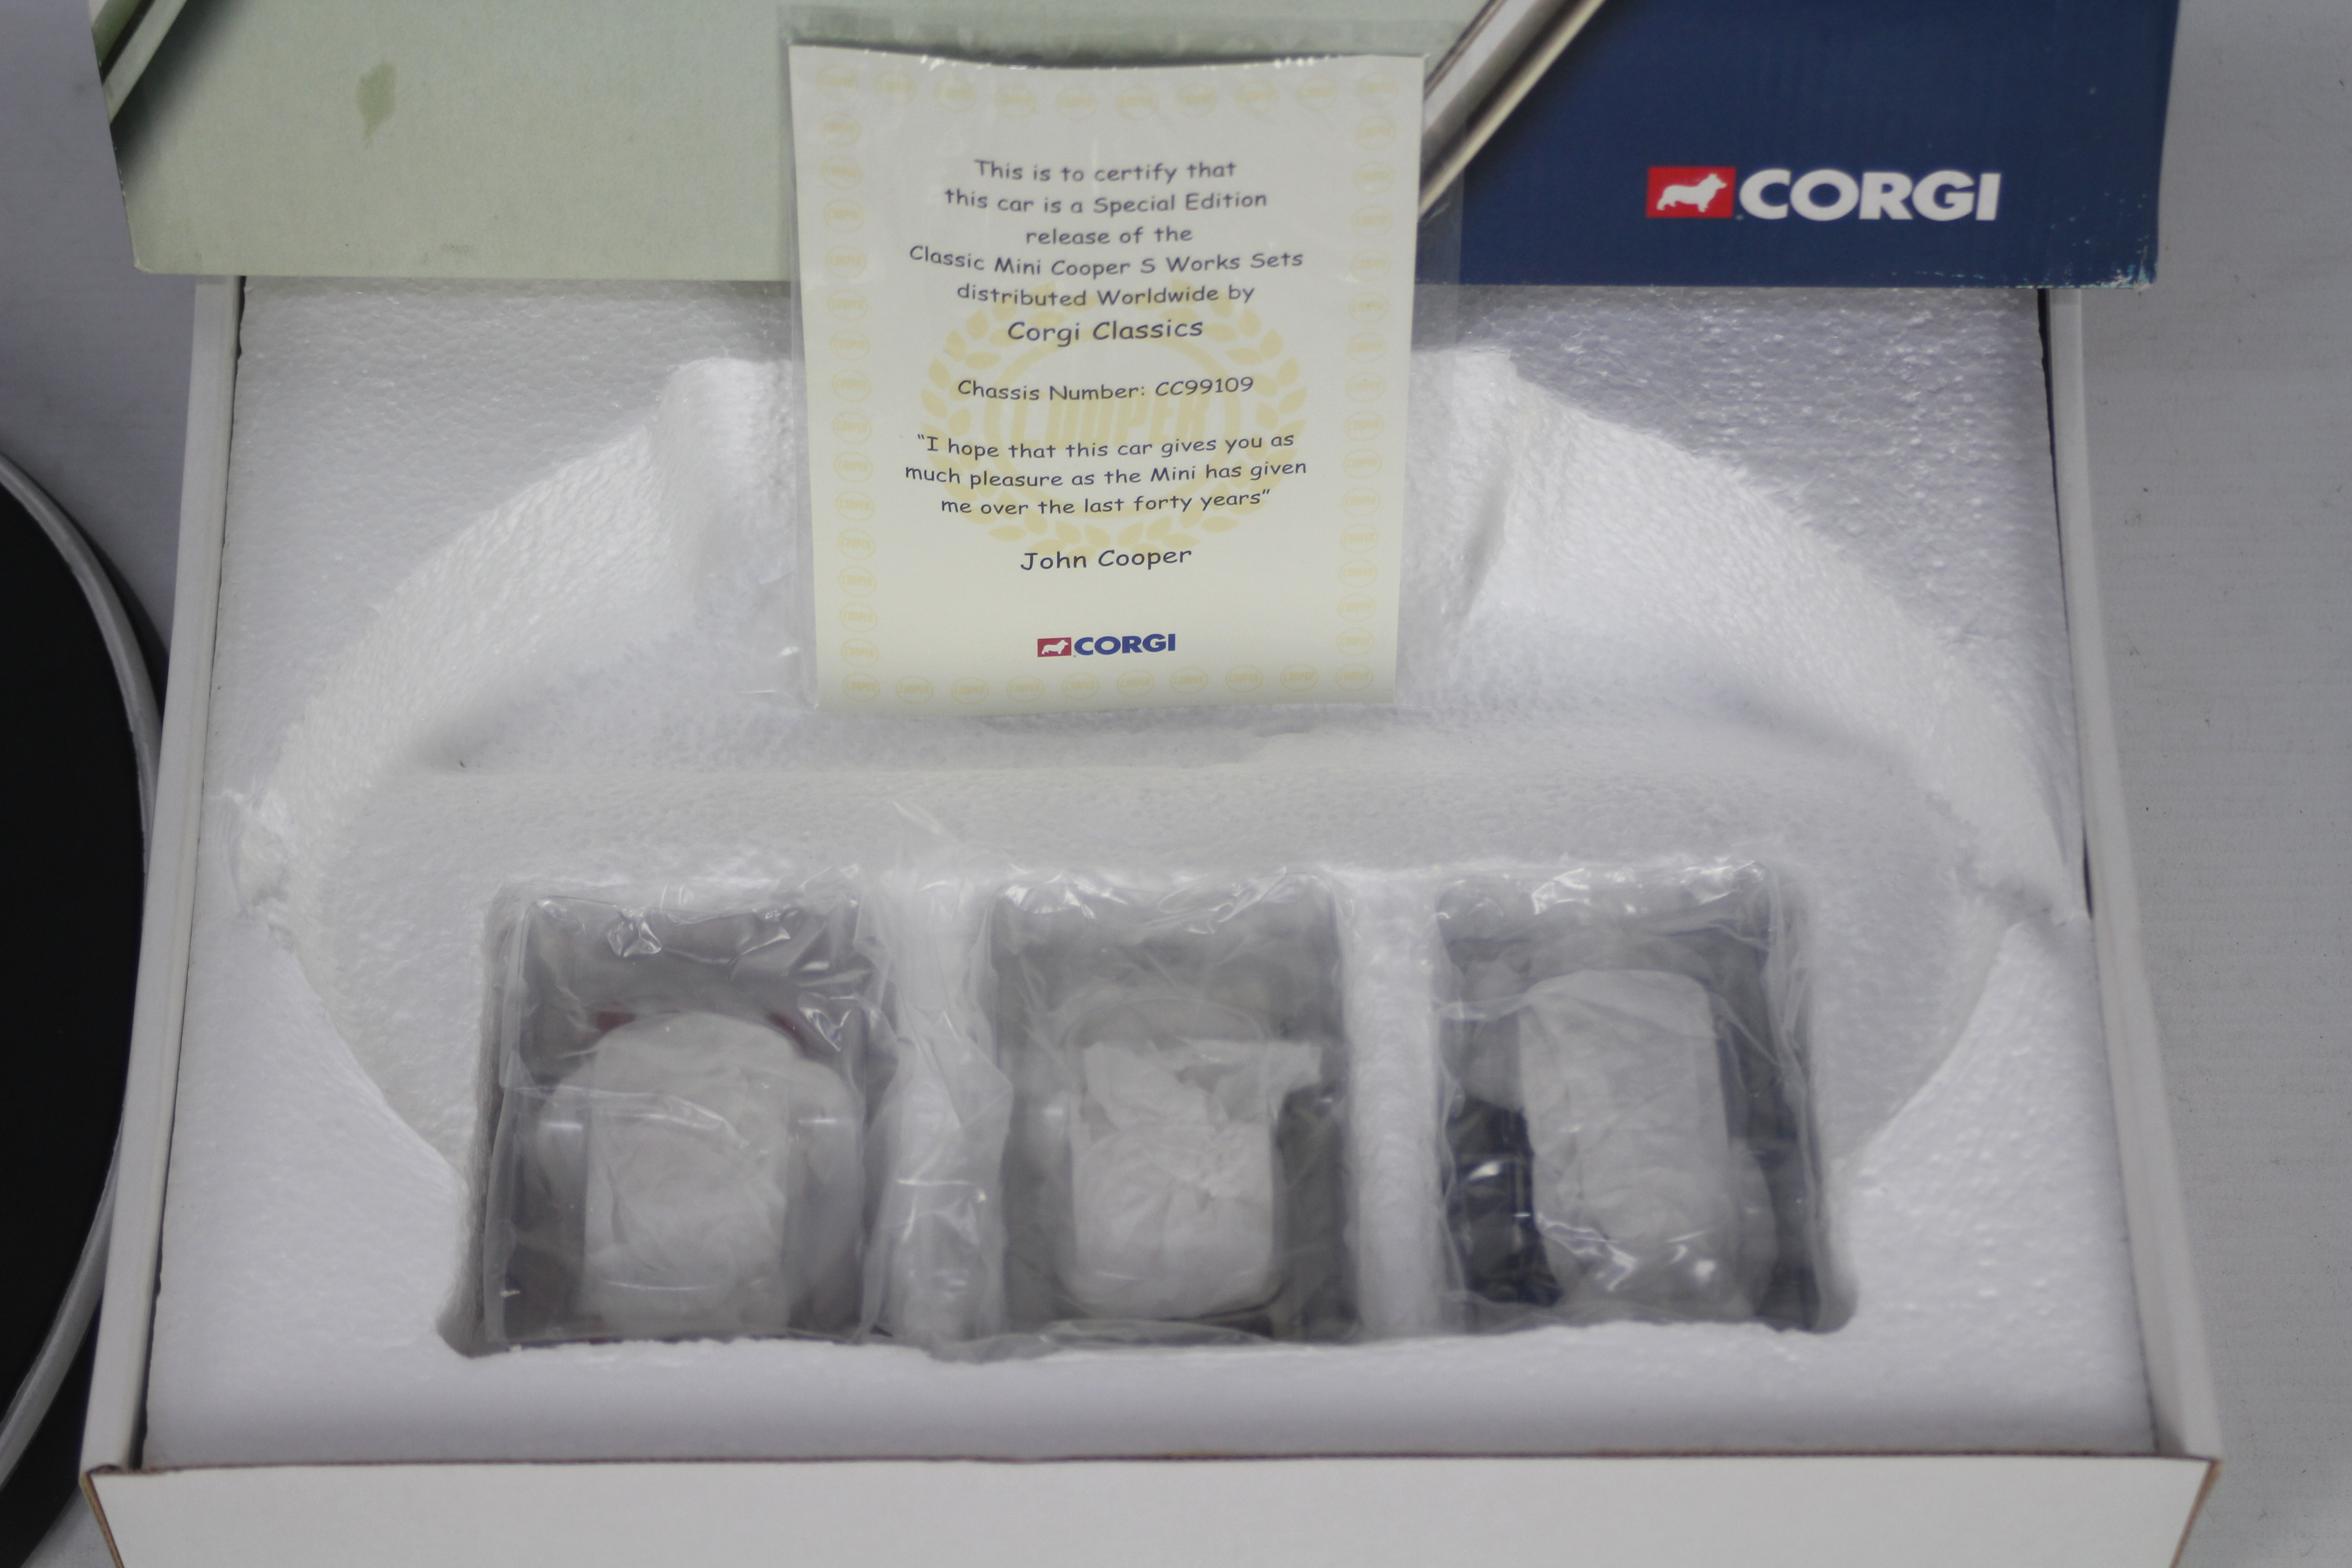 Corgi - A boxed Corgi Limited Edition CC99109 'Coopers 3-Piece Set'. - Image 2 of 3